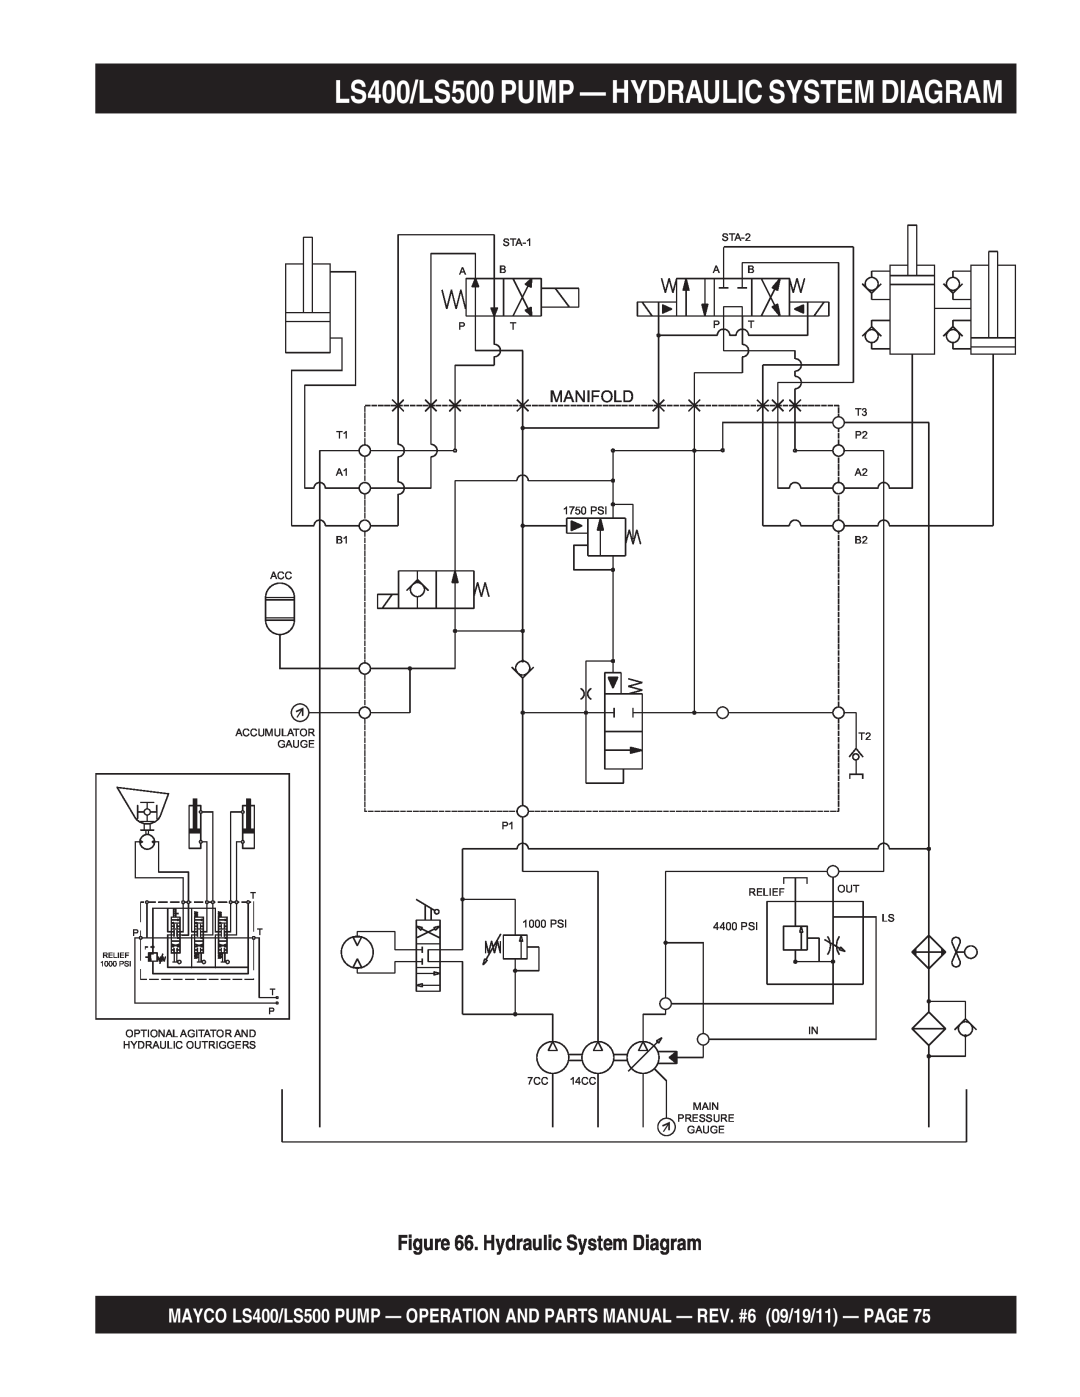 Multiquip manual LS400/LS500 PUMP - HYDRAULIC SYSTEM DIAGRAM, Hydraulic System Diagram, Manifold 